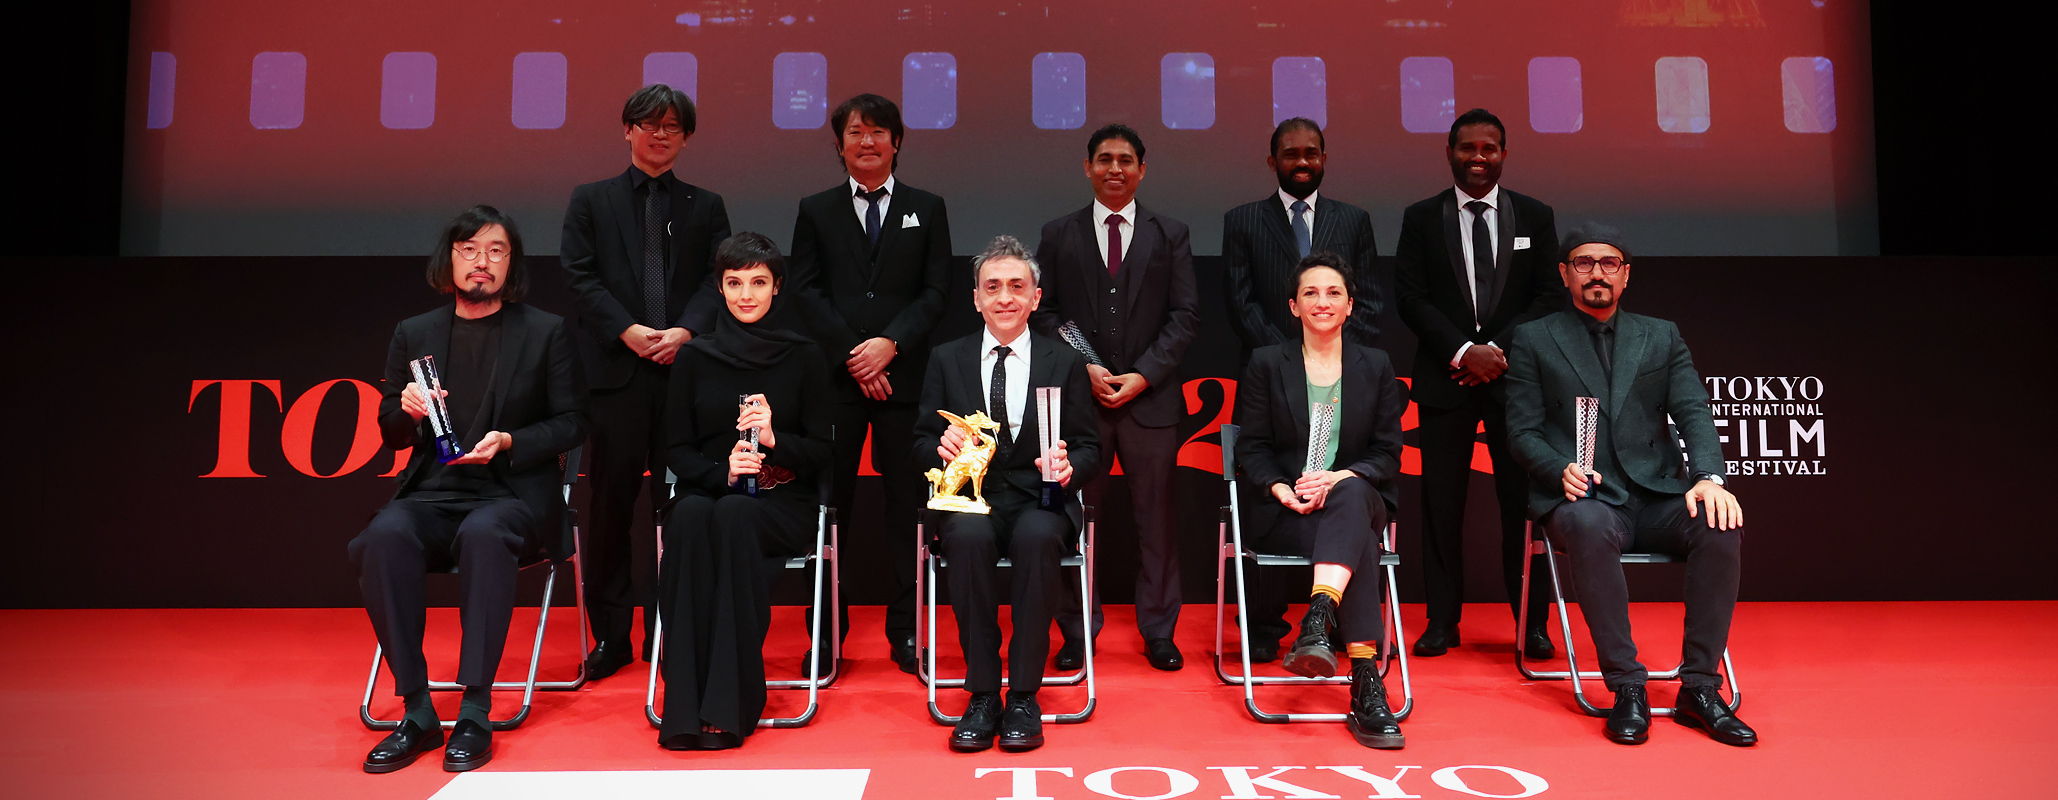 The 35th Tokyo International Film Festival Award Winners